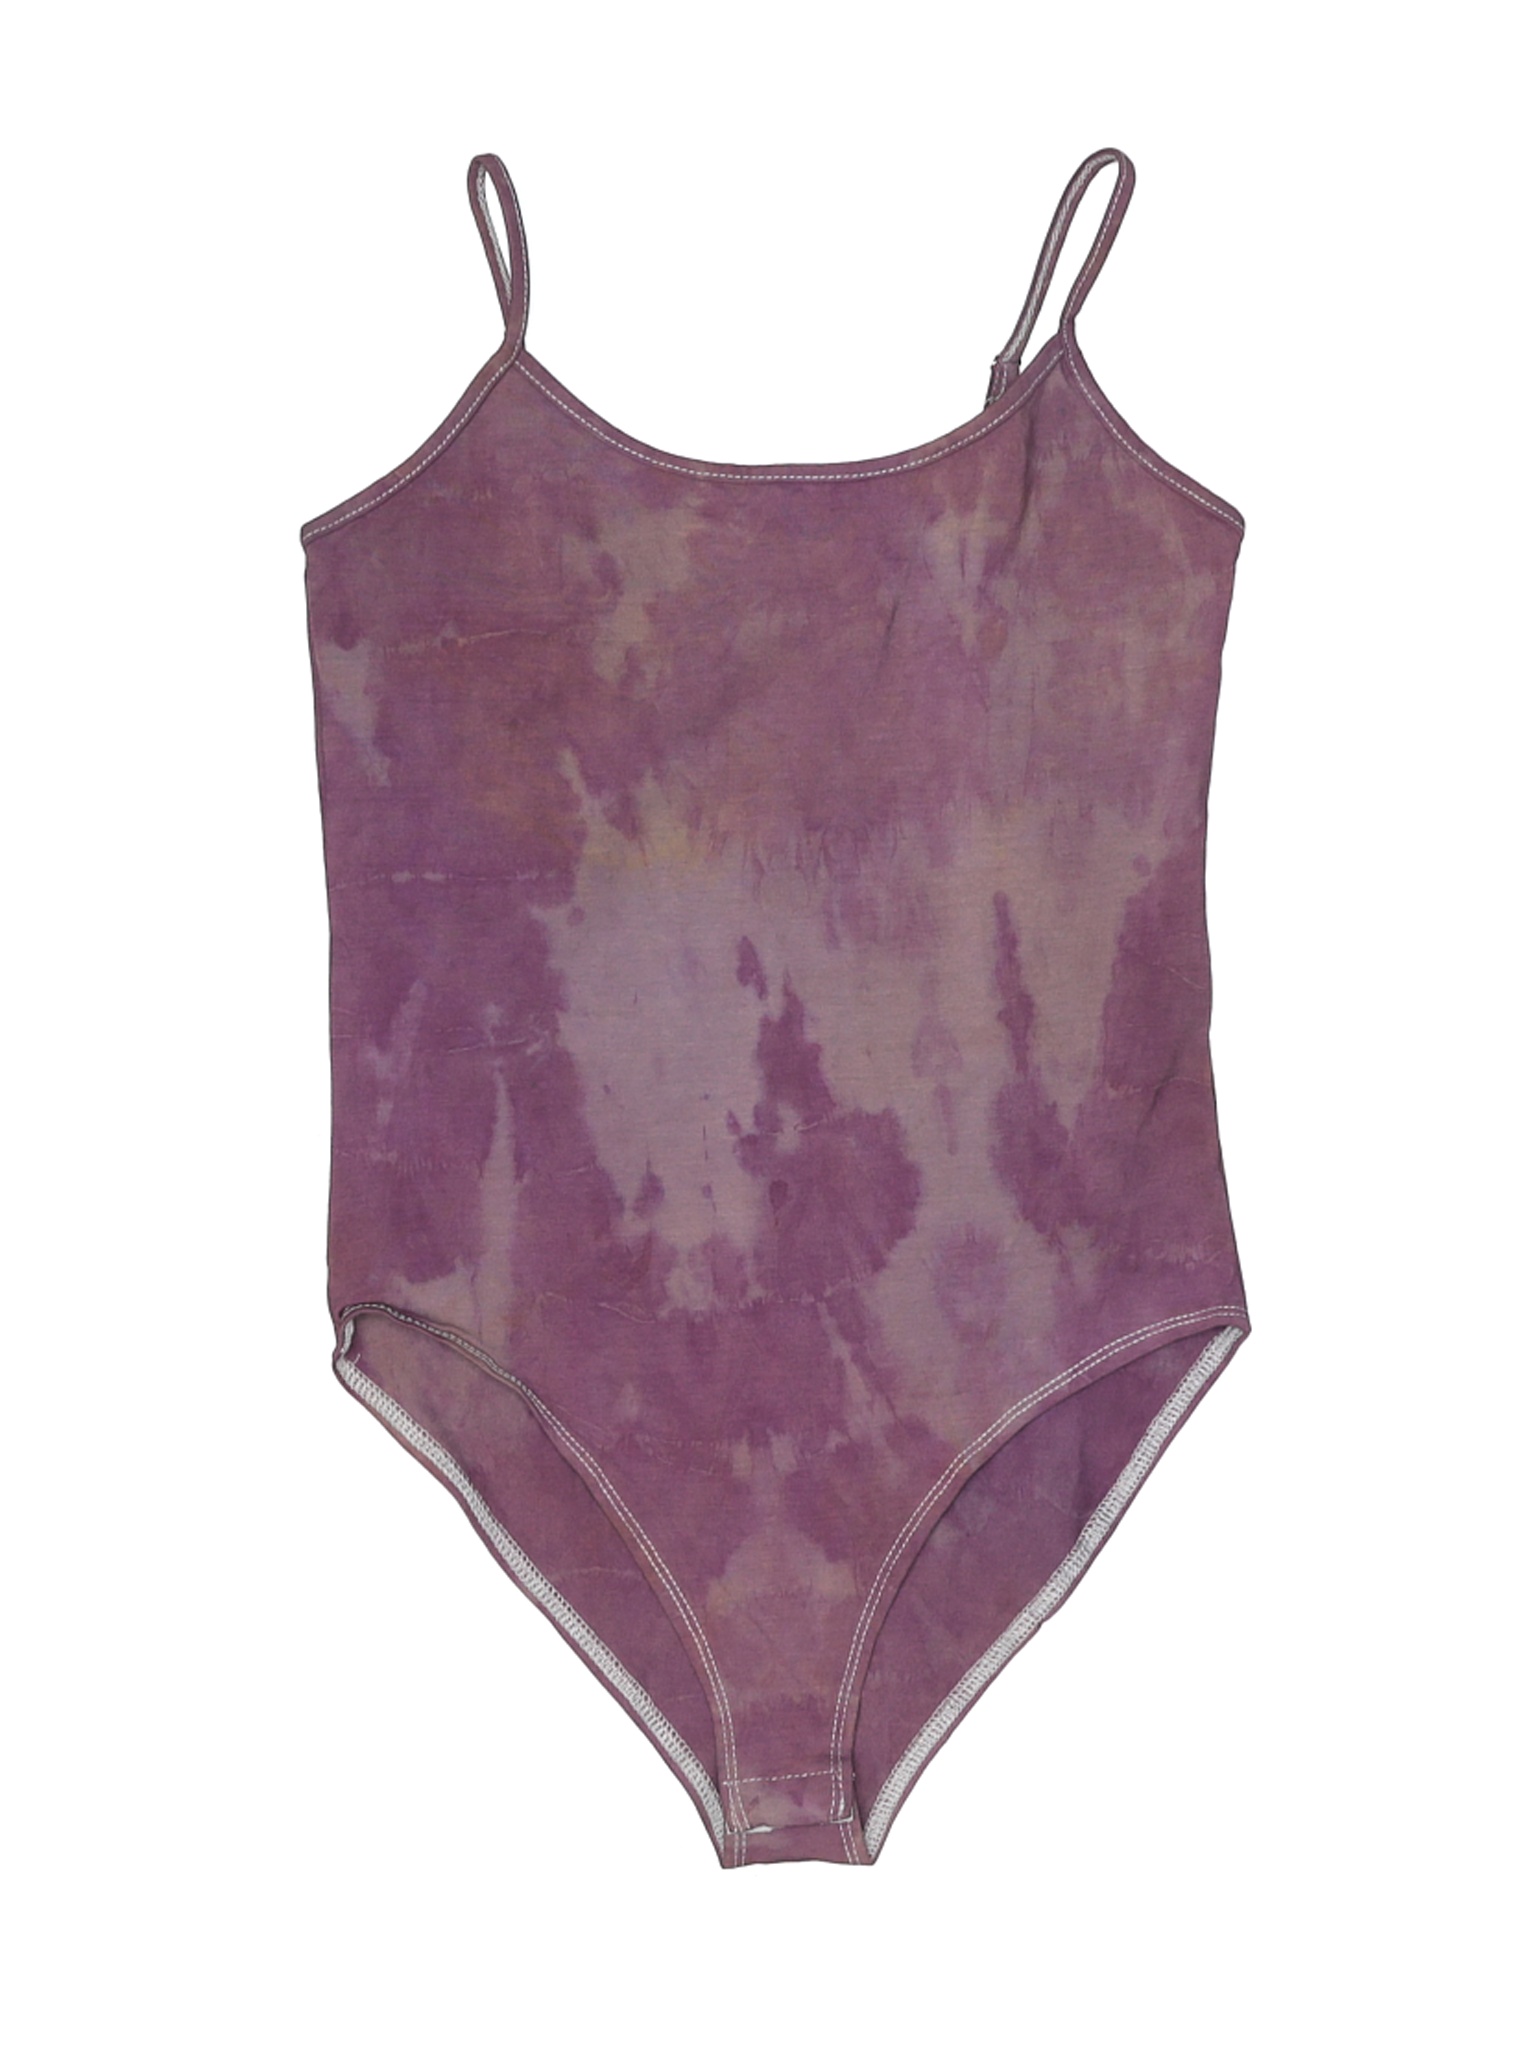 MANGOPOP Collection Purple Bodysuit Size S - 63% off | thredUP